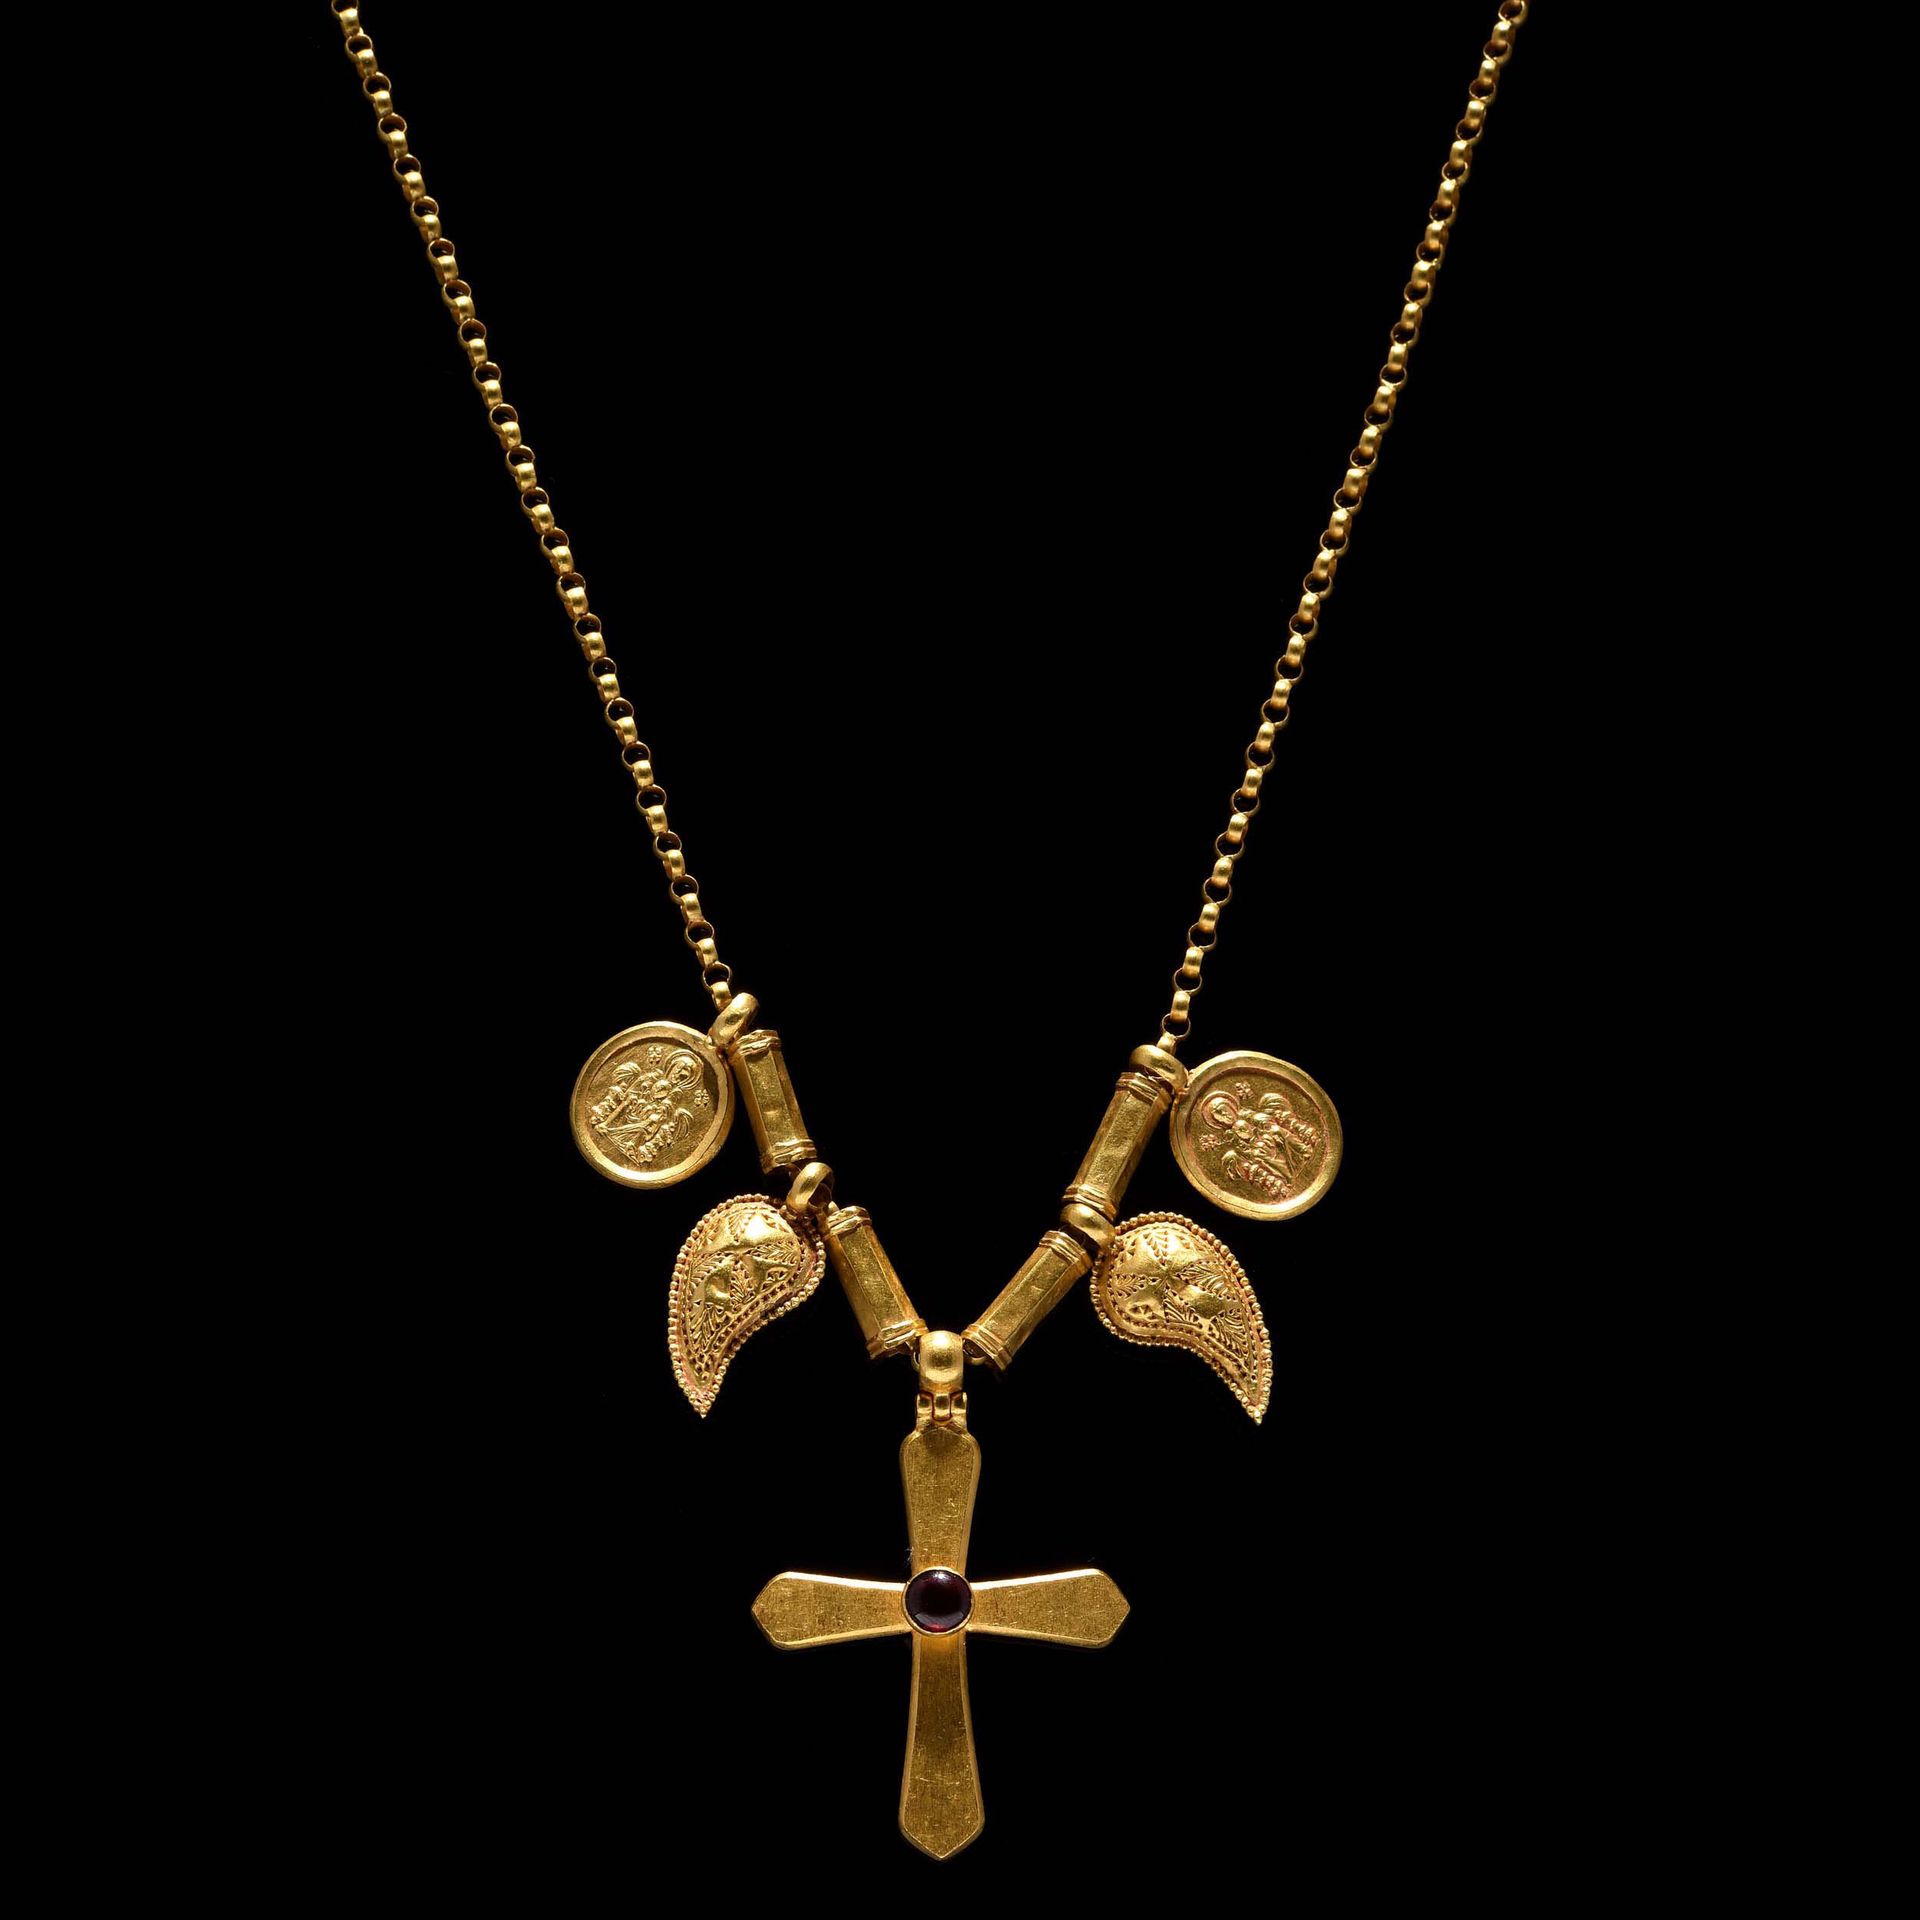 Null 重要项链

拜占庭艺术，6-7世纪。

金色的，由交织的奖章组成的链条。纯金的中央吊坠是一个十字架的形式，在横截面的交汇处镶嵌着一颗漂亮的凸圆形切割石&hellip;